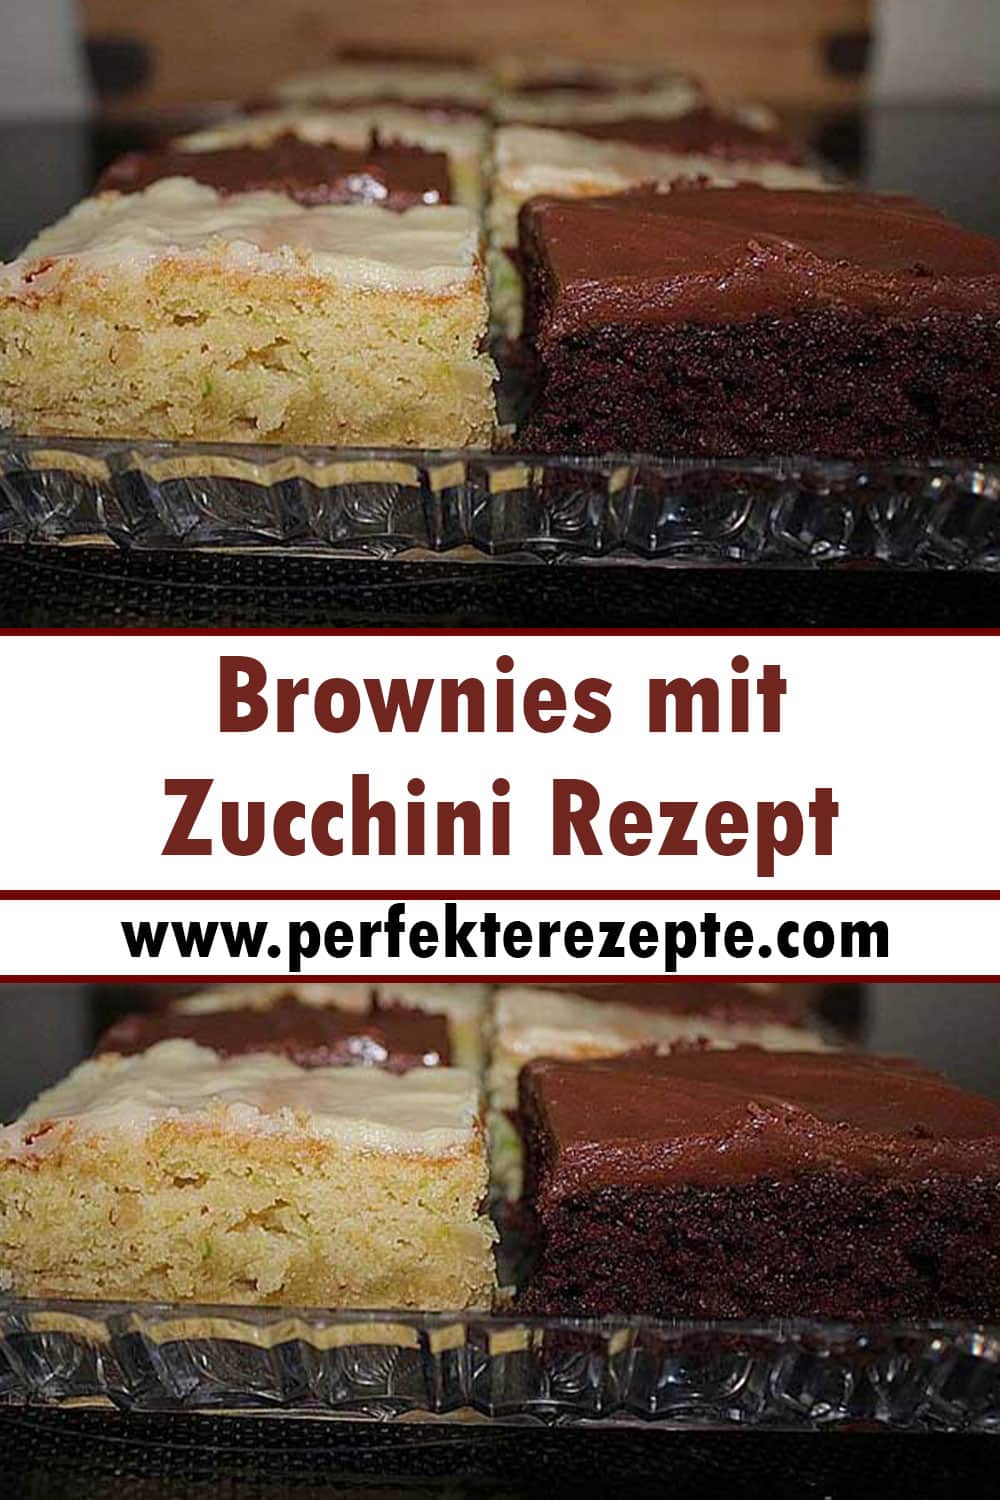 Brownies mit Zucchini Rezept